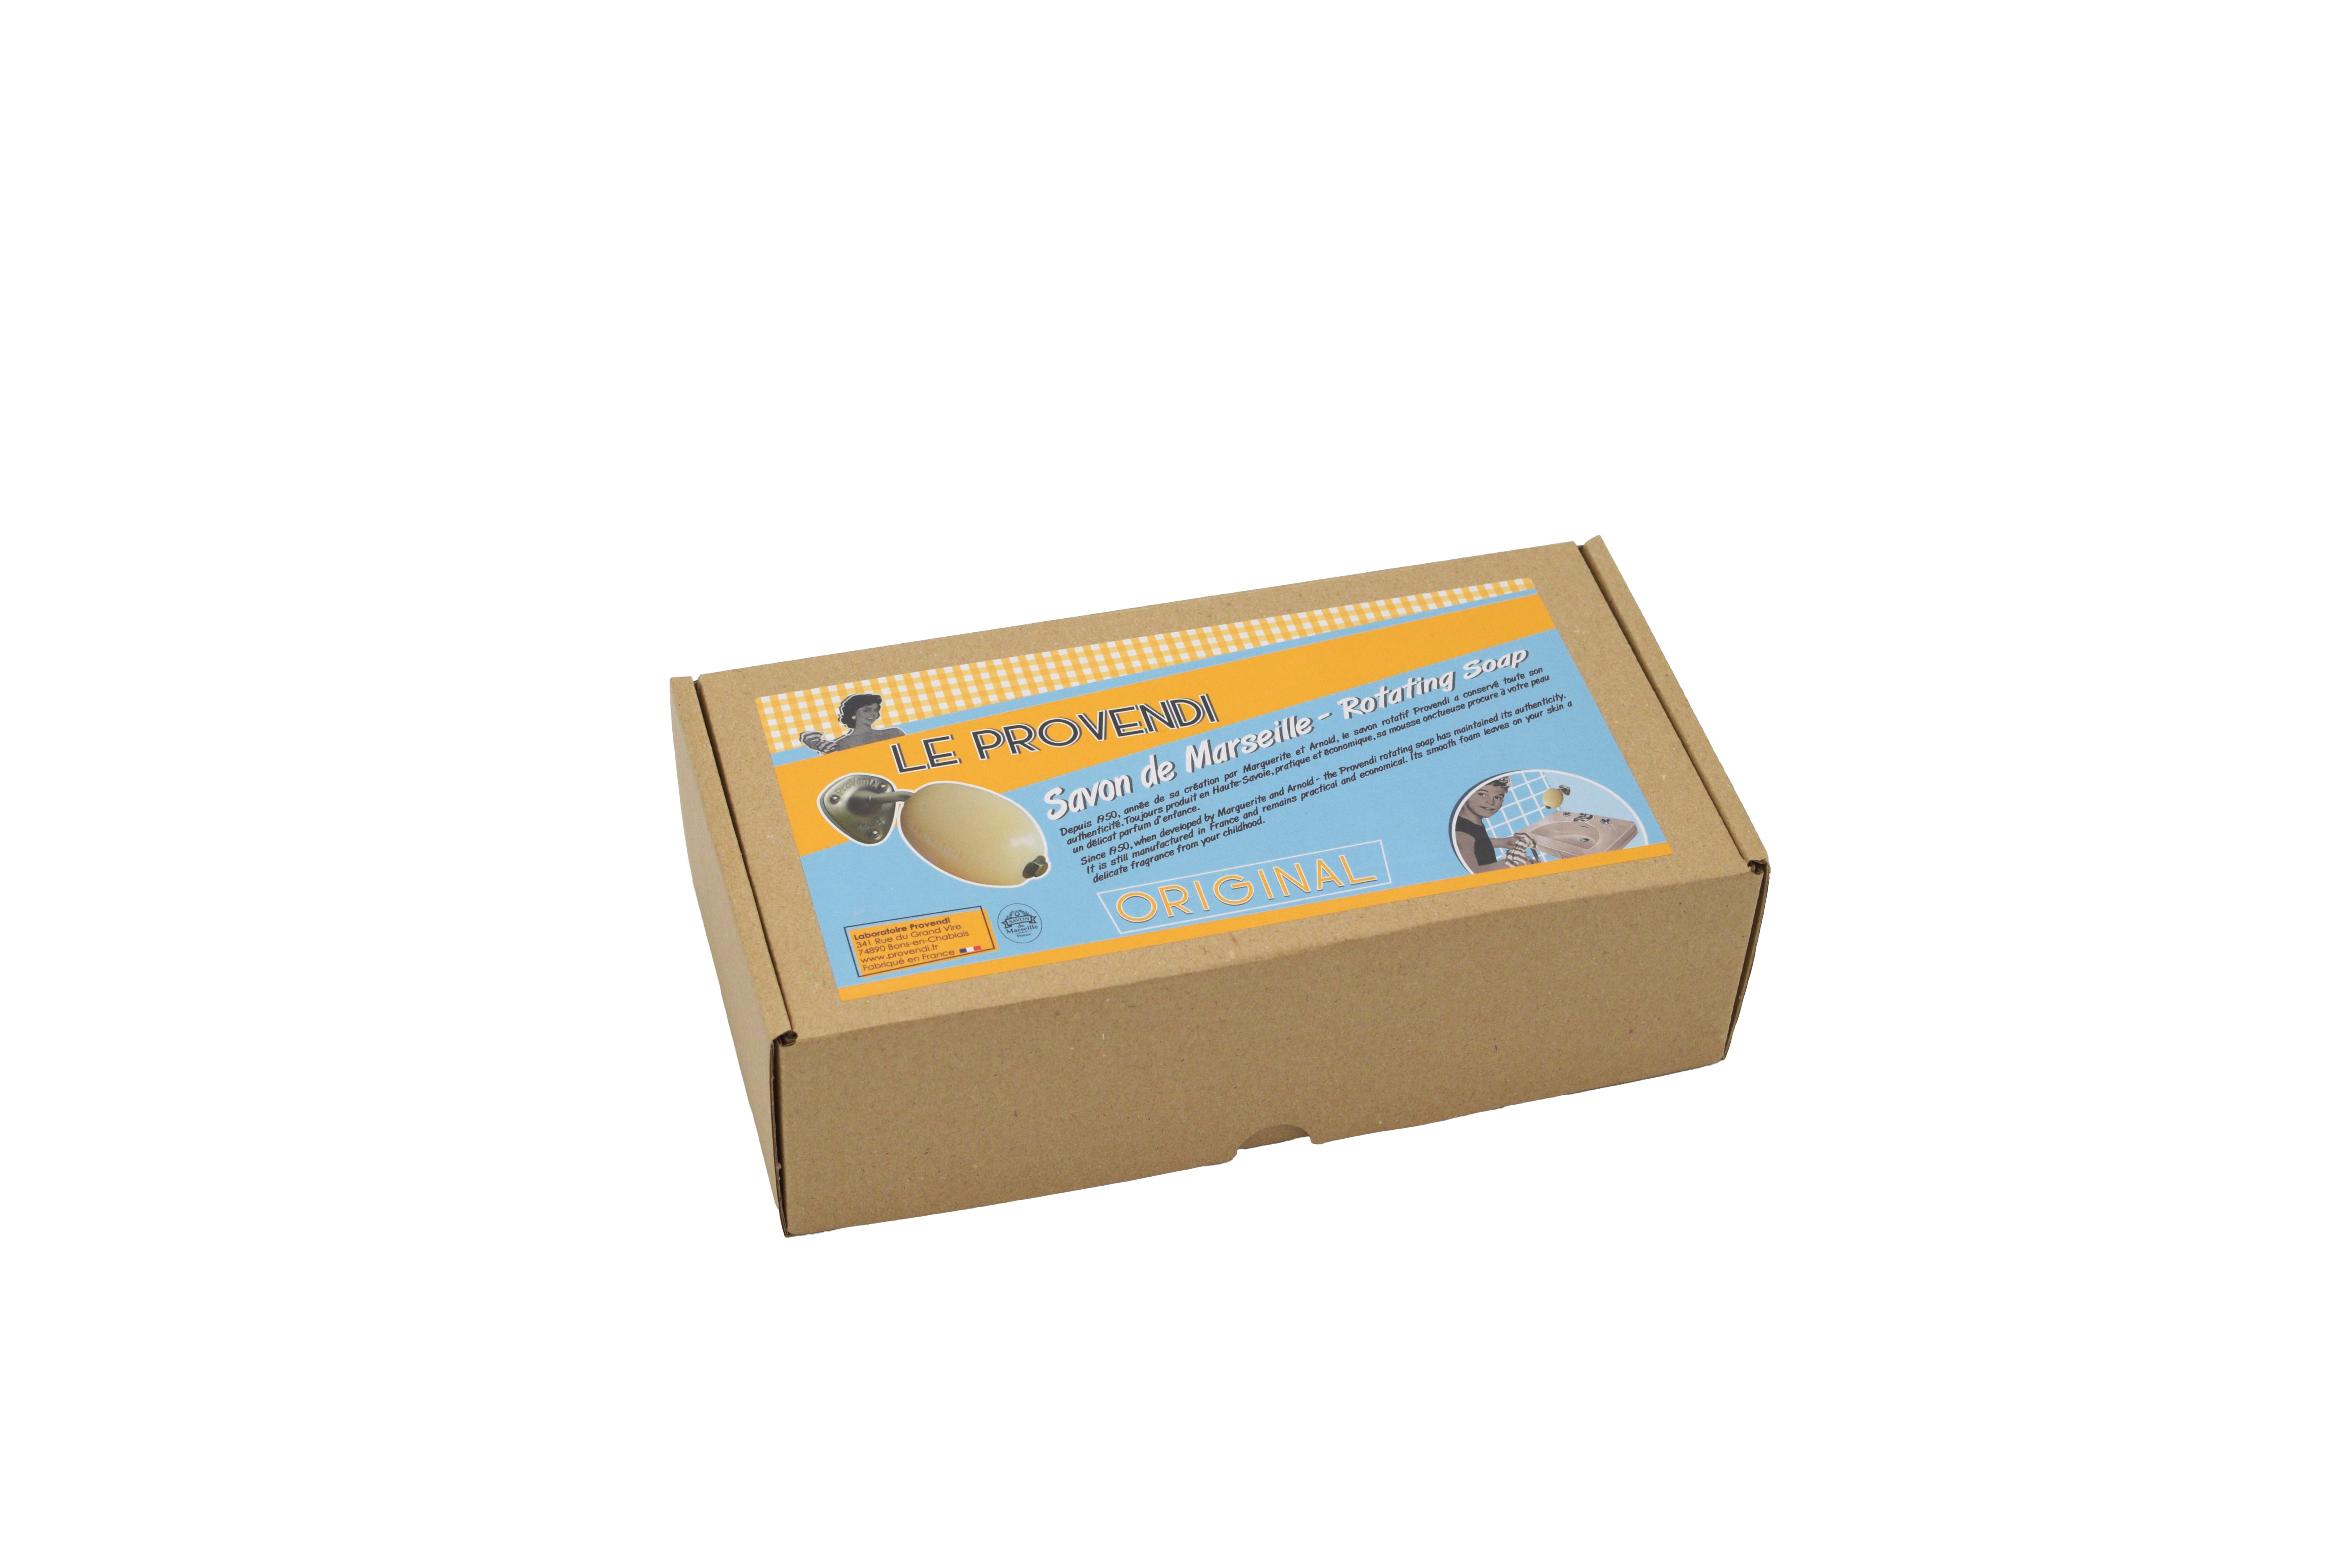 Soap Holder & Soap Box by Provendi